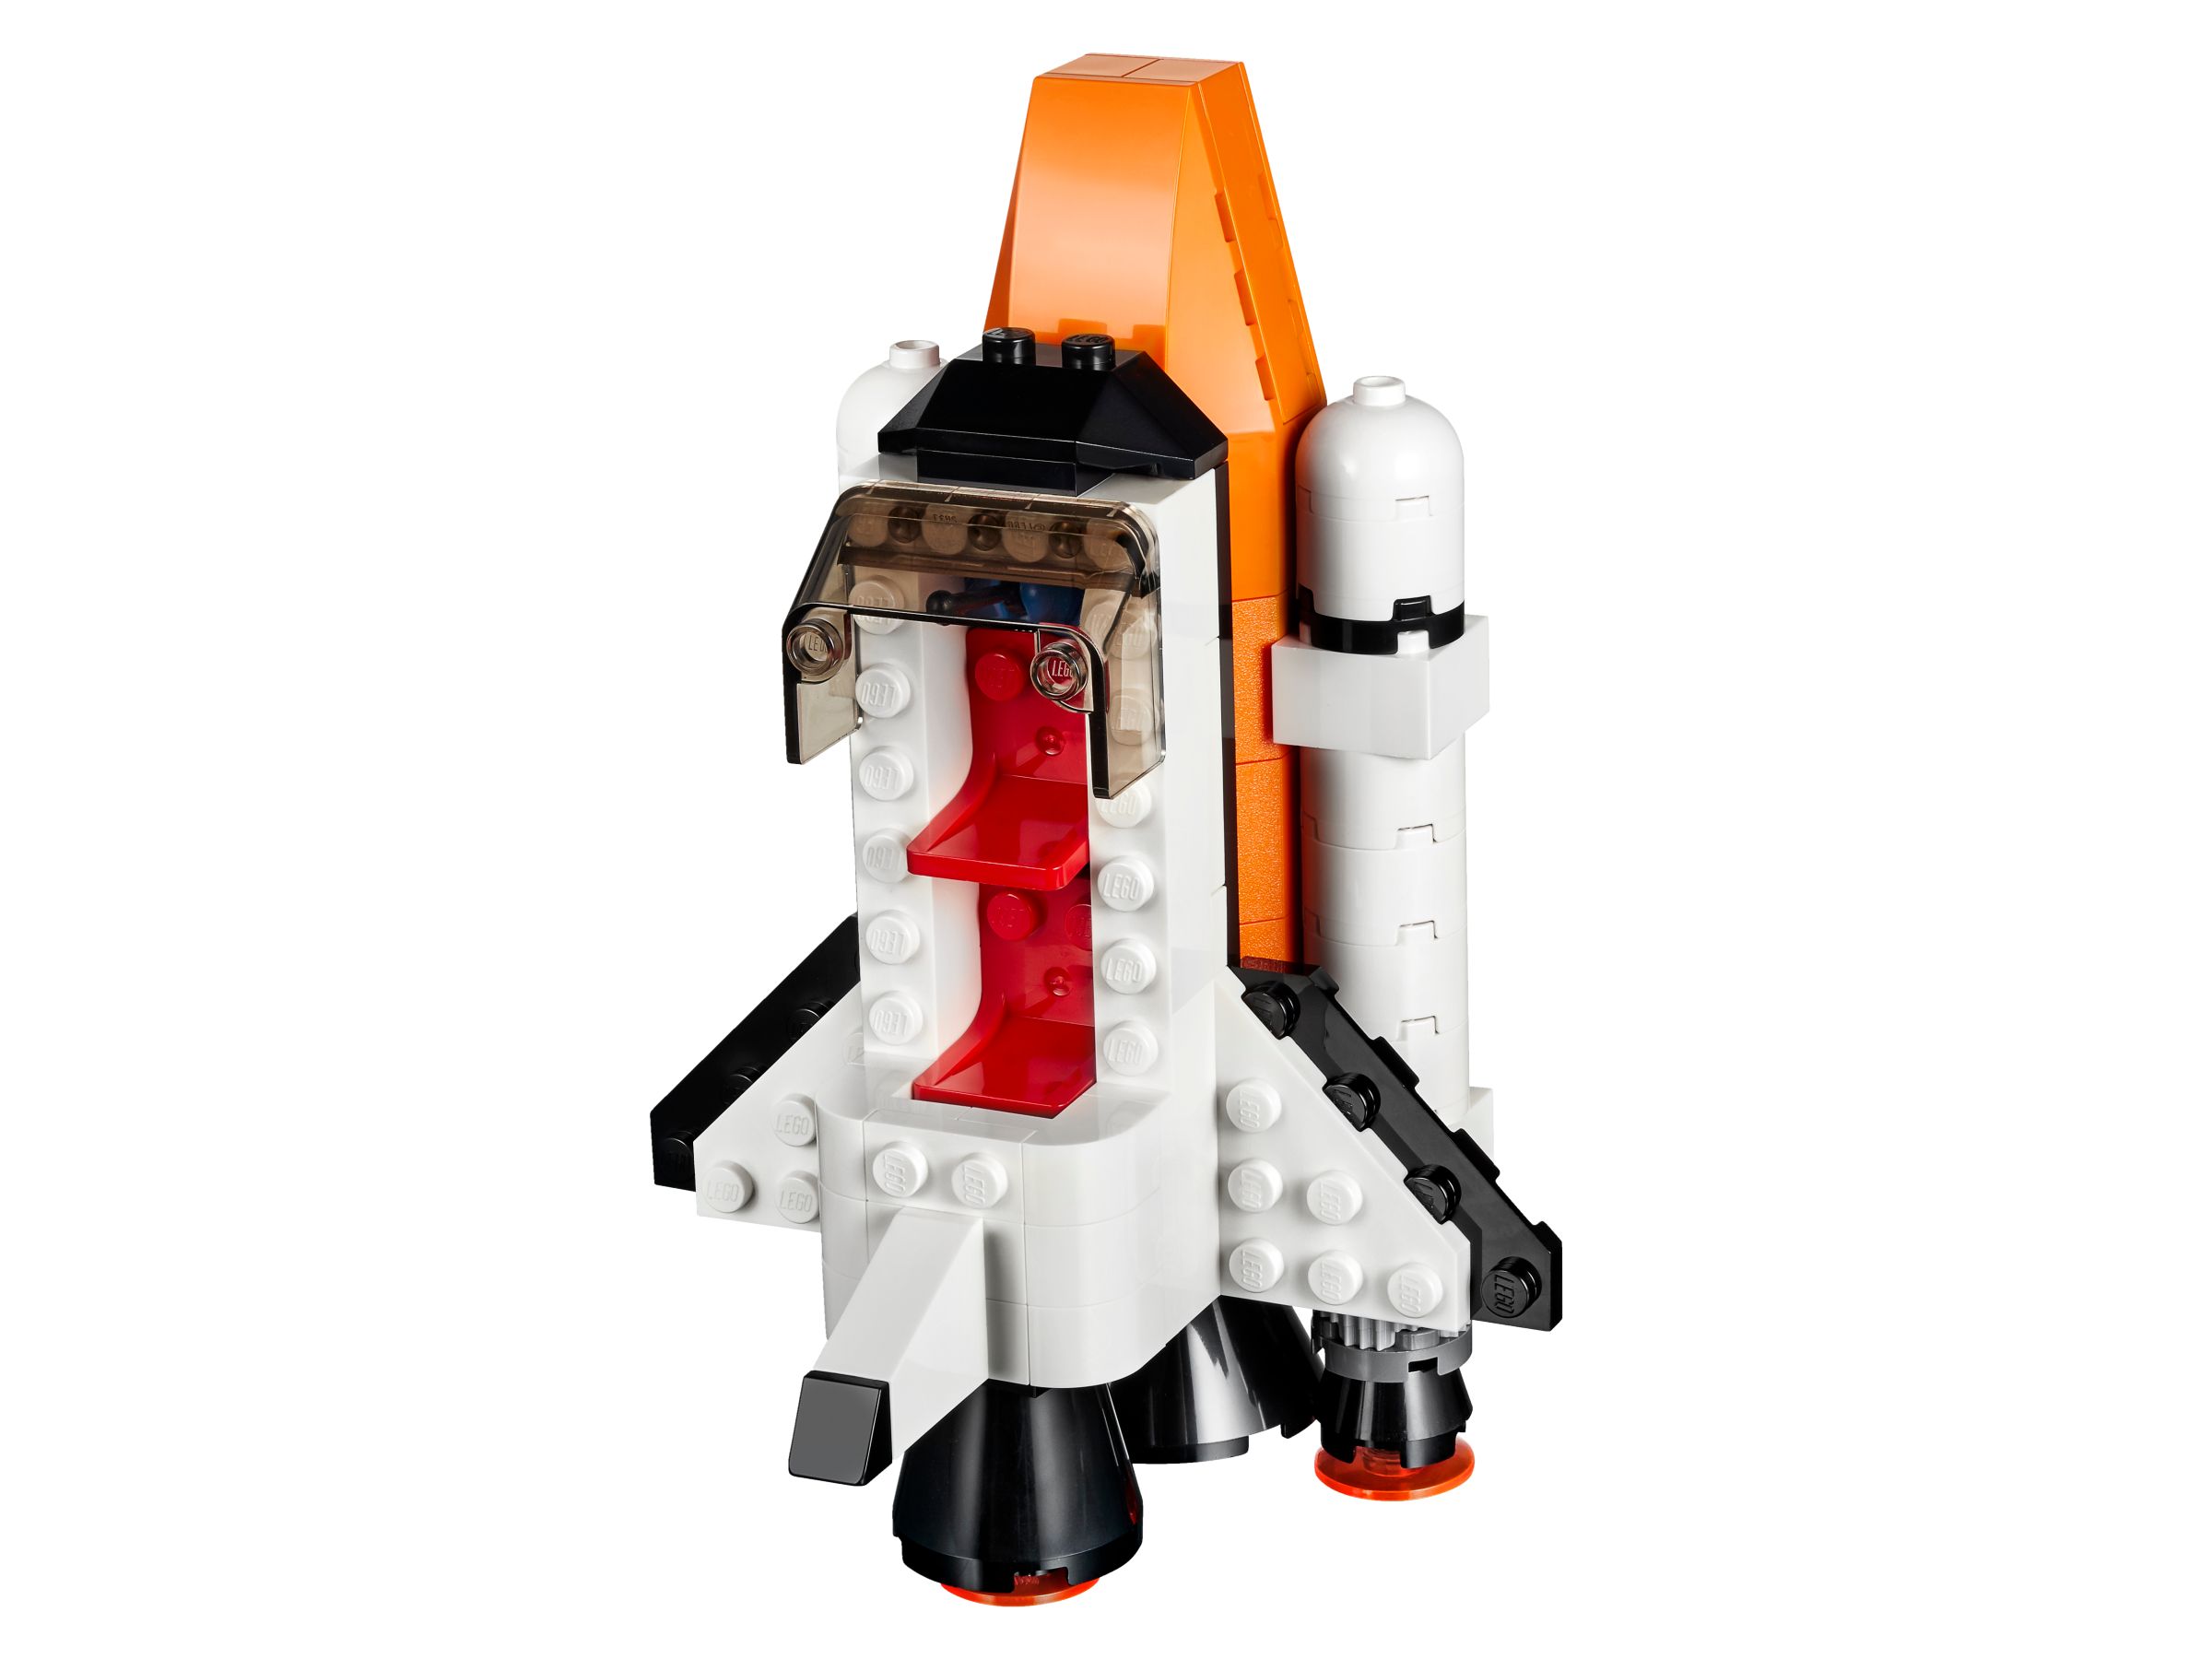 LEGO Building Bigger Thinking 10405 Mars-Mission LEGO_10405_alt4.jpg